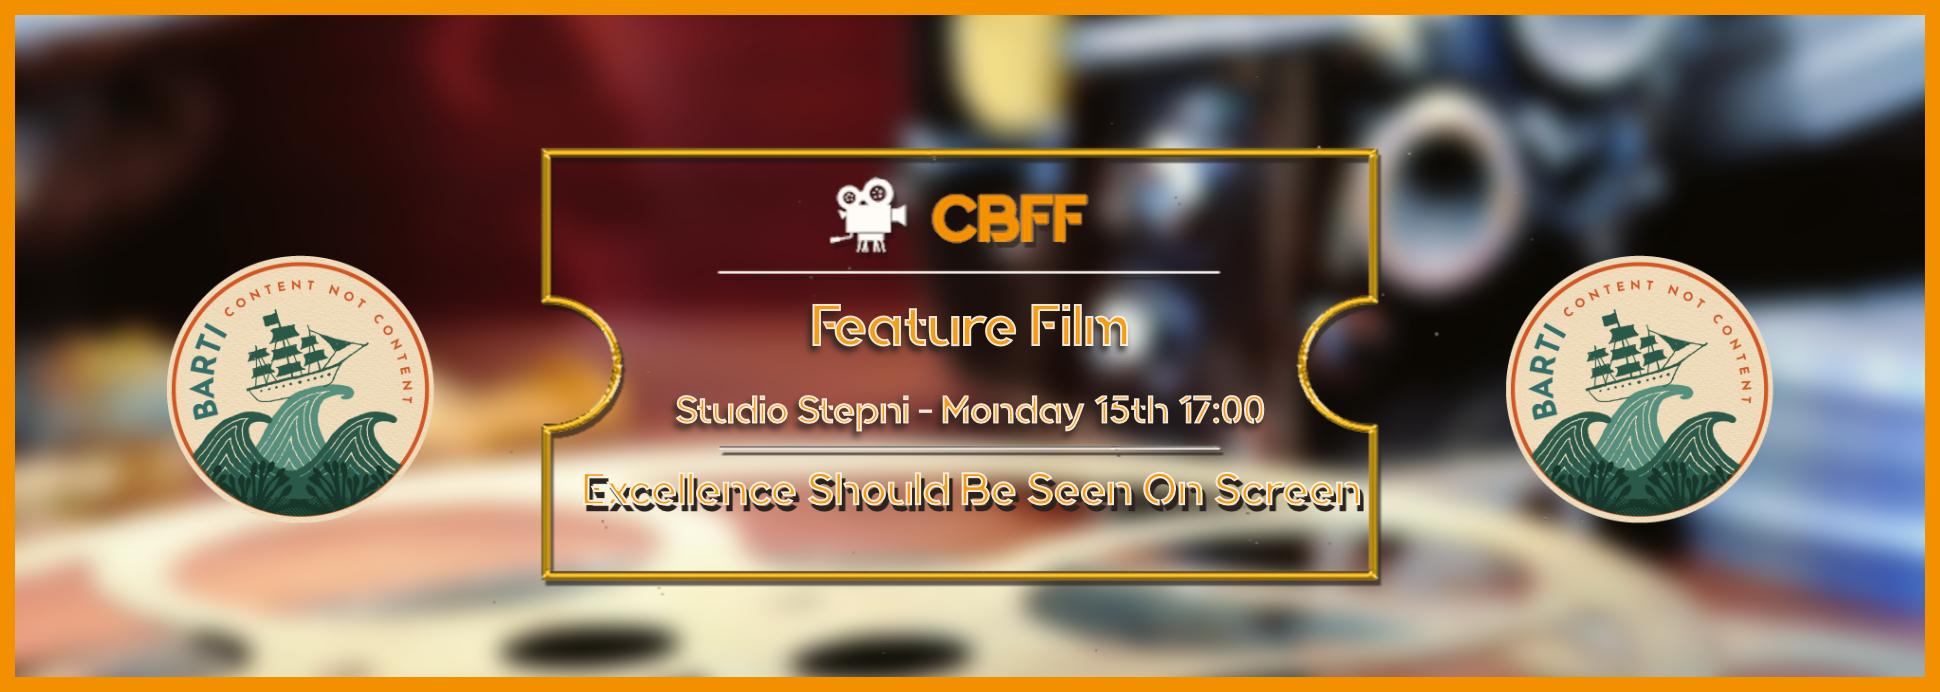 Crochan Feature Film 15th 17:00